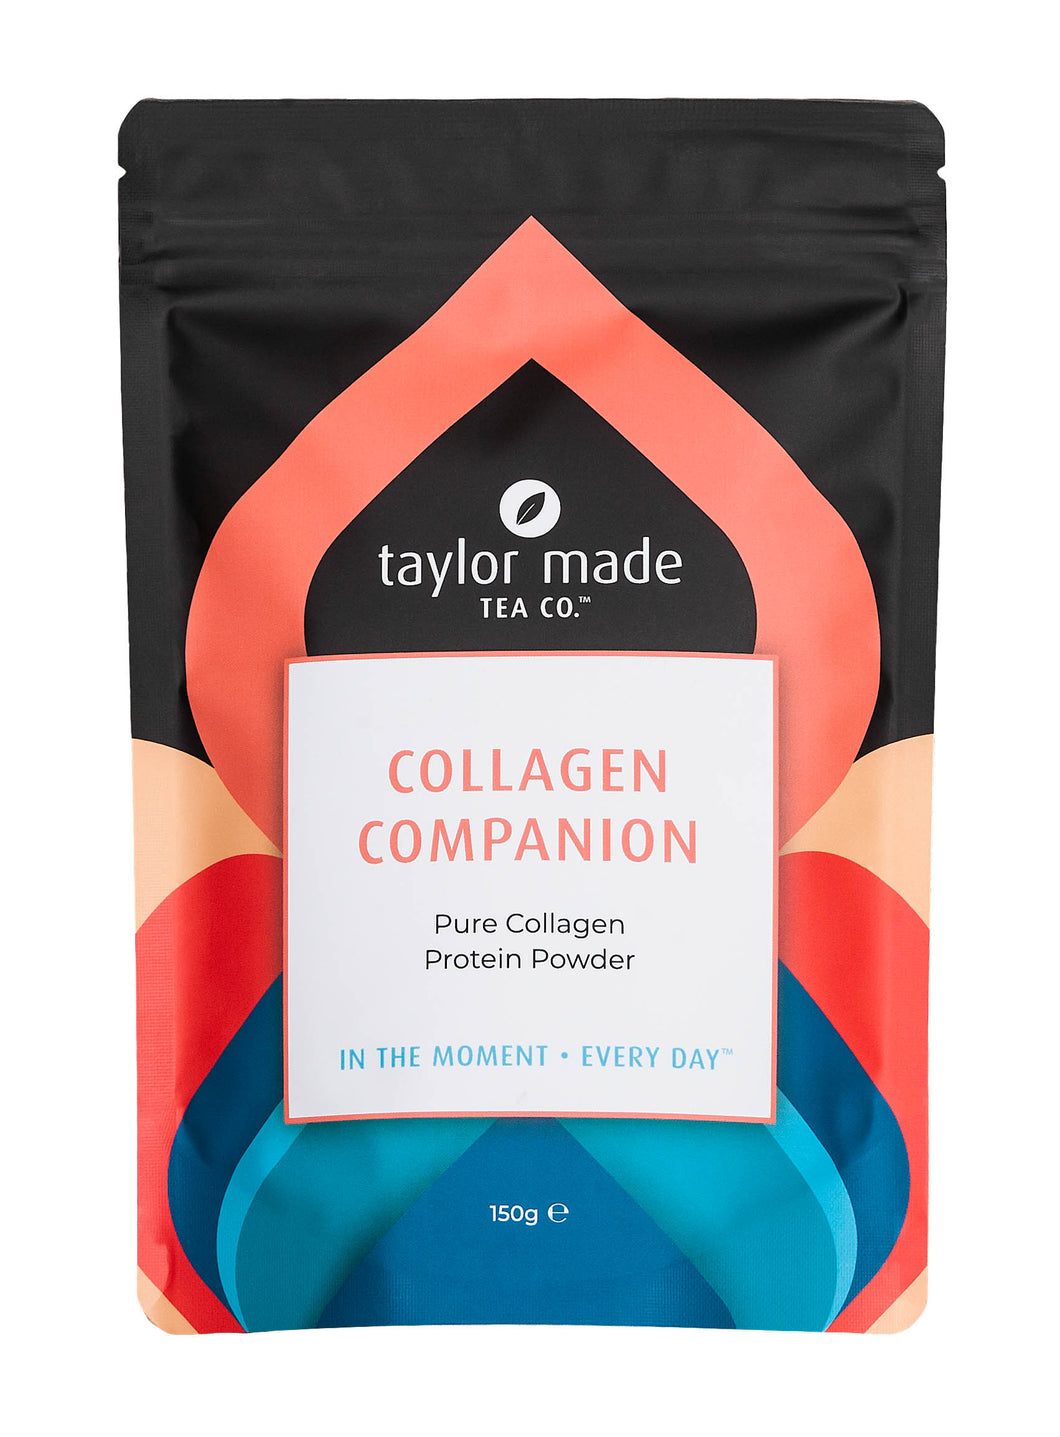 Collagen Companion collagen peptide powder 150g. Collagen protein powder. Collagen peptides. Collagen beauty. Bovine collagen peptides. Contemporary pink and blue design scheme.